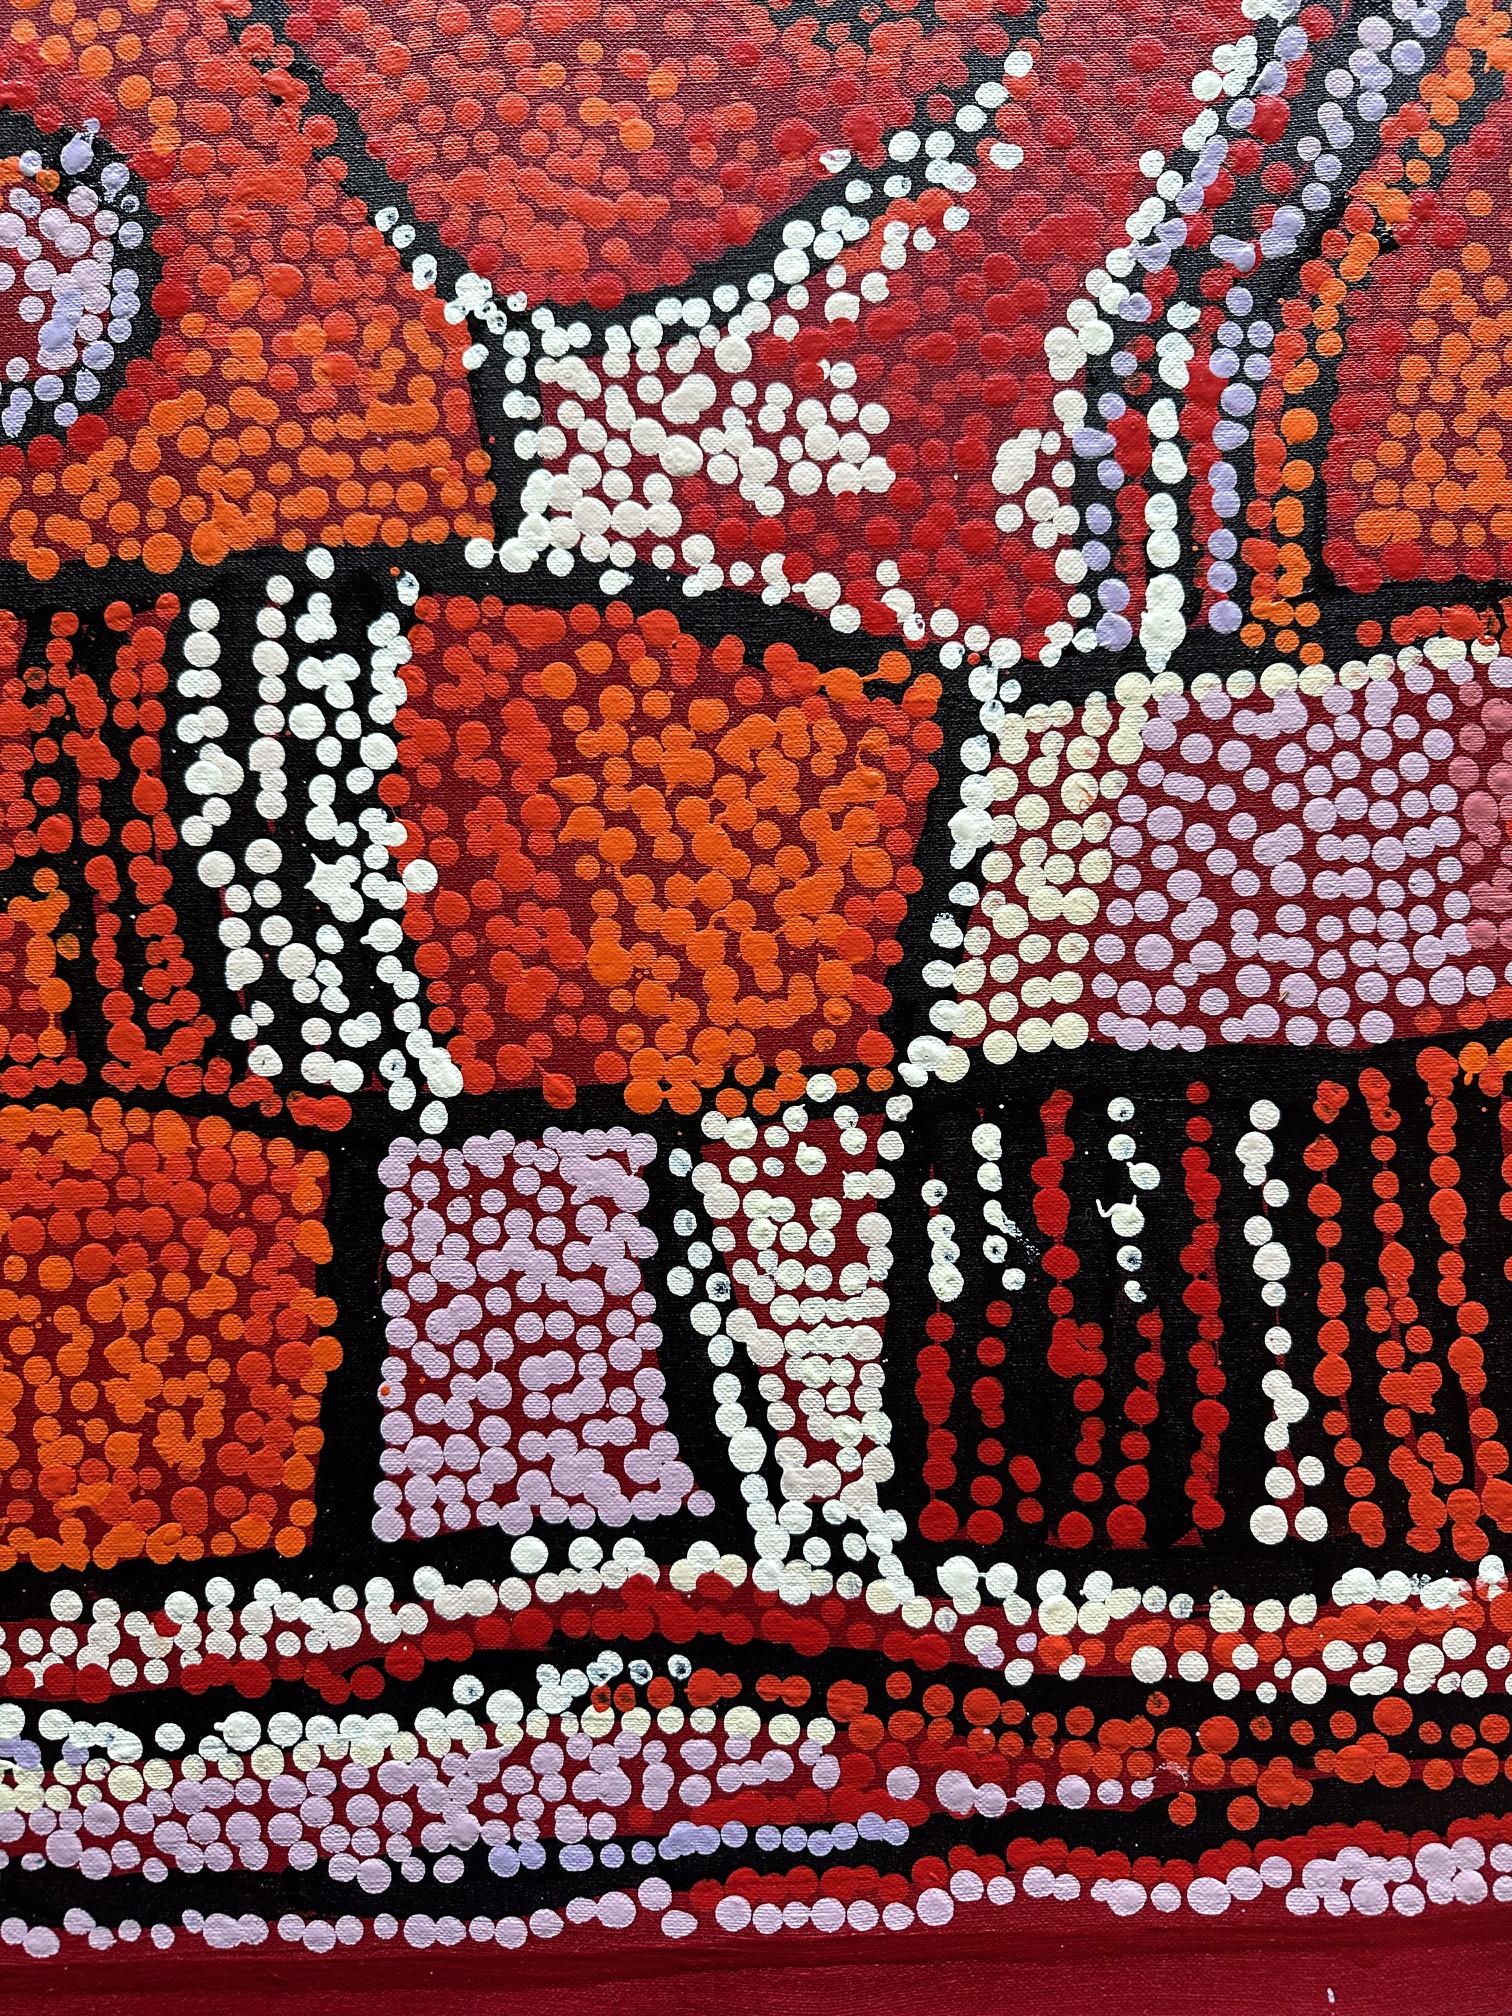 Contemporary Australian Aboriginal Painting by Naata Nungurrayi 1